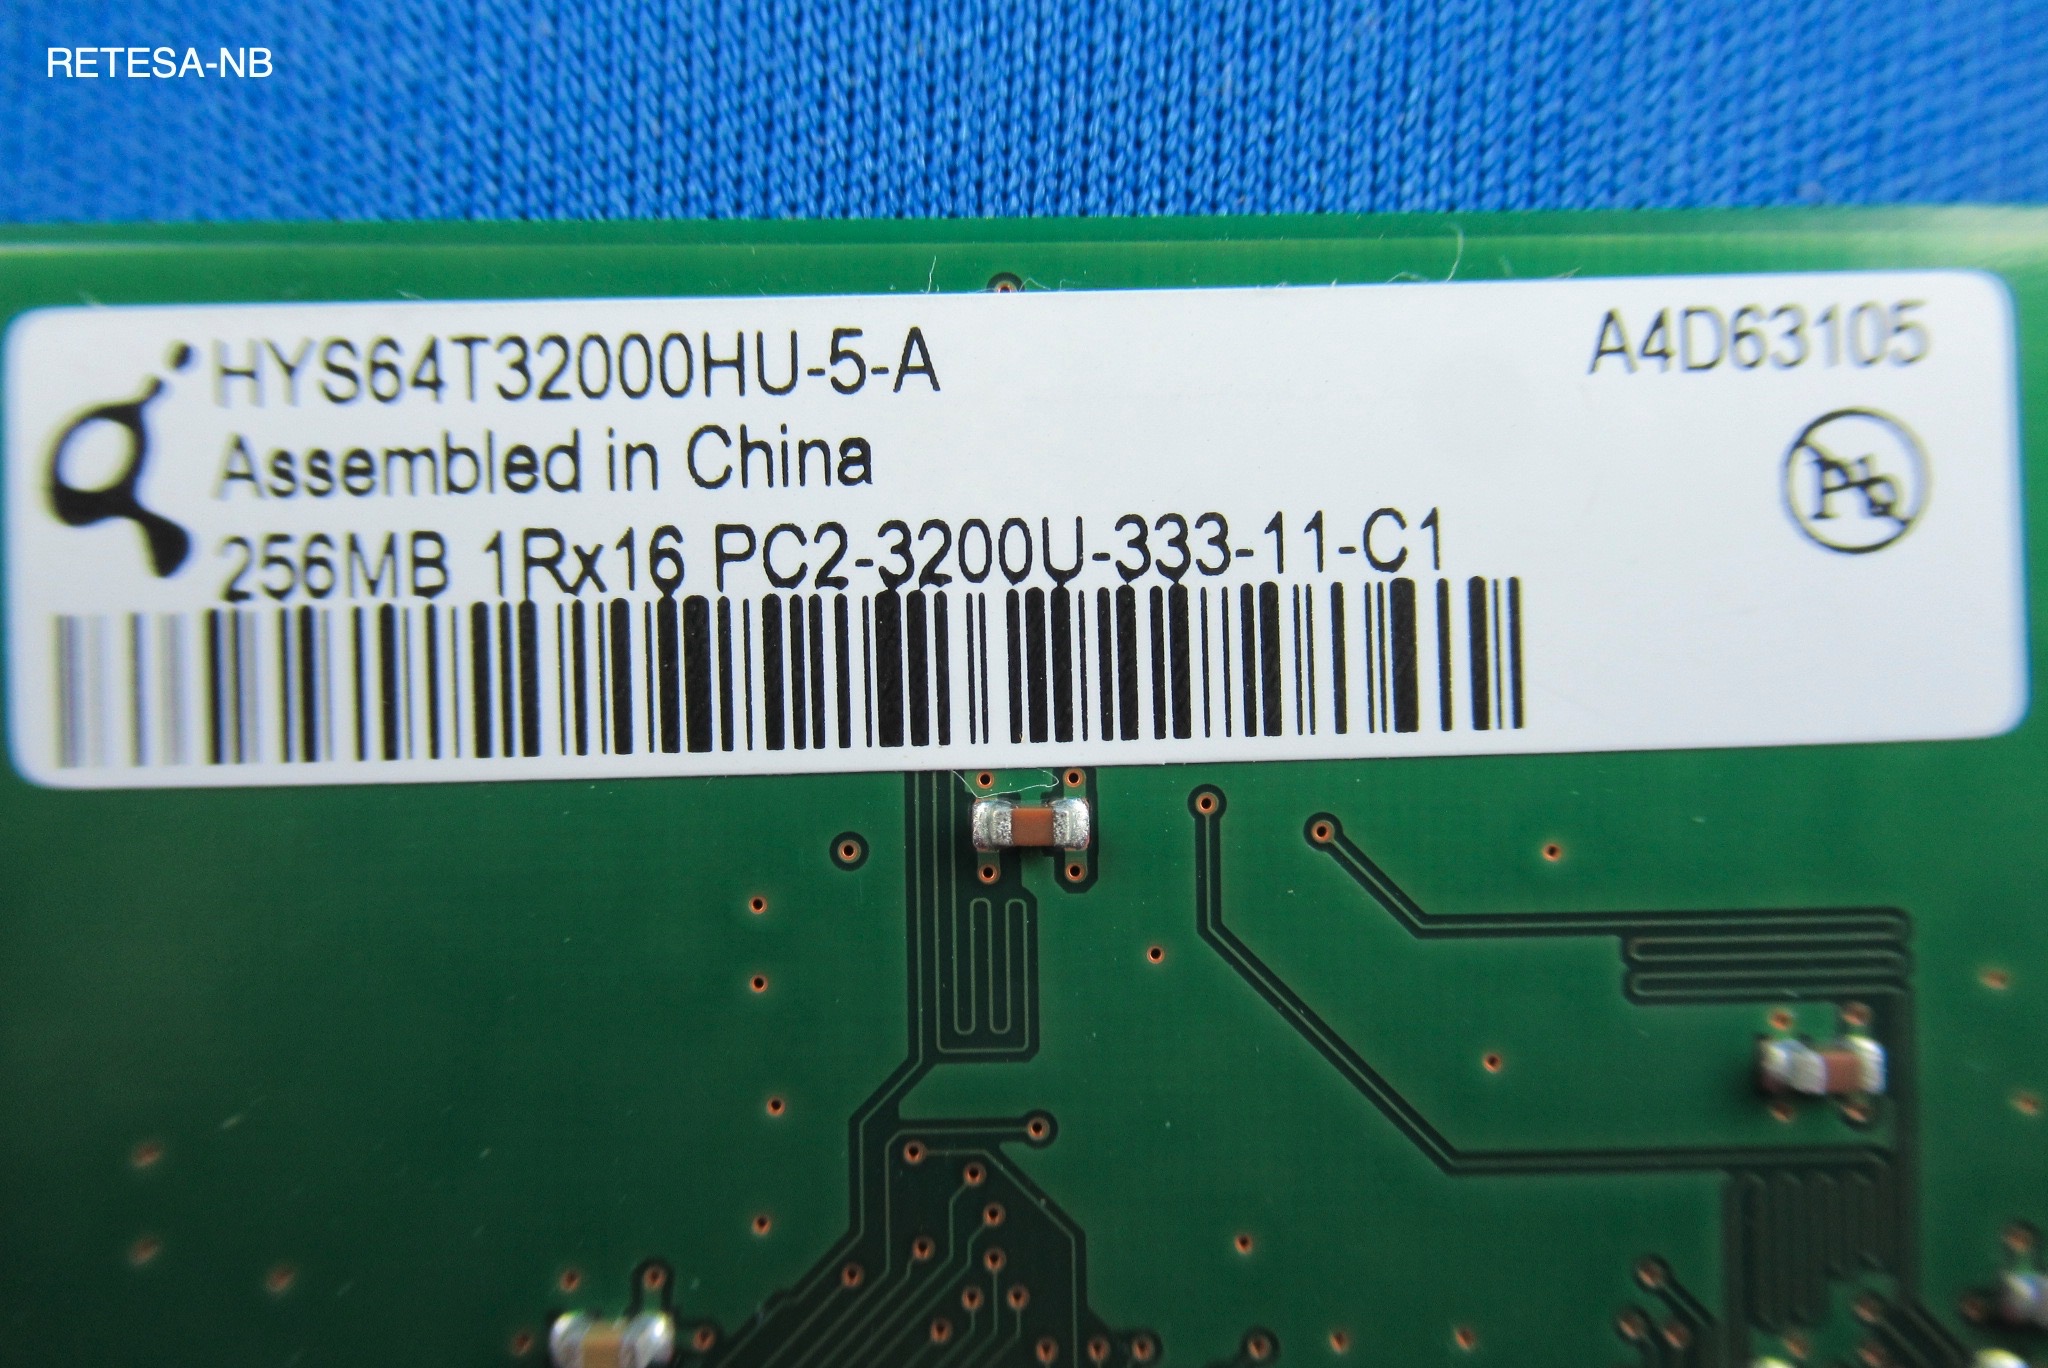 DDR2-RAM 256MB PC400 HYNIX HYS64T32000HU-5-A